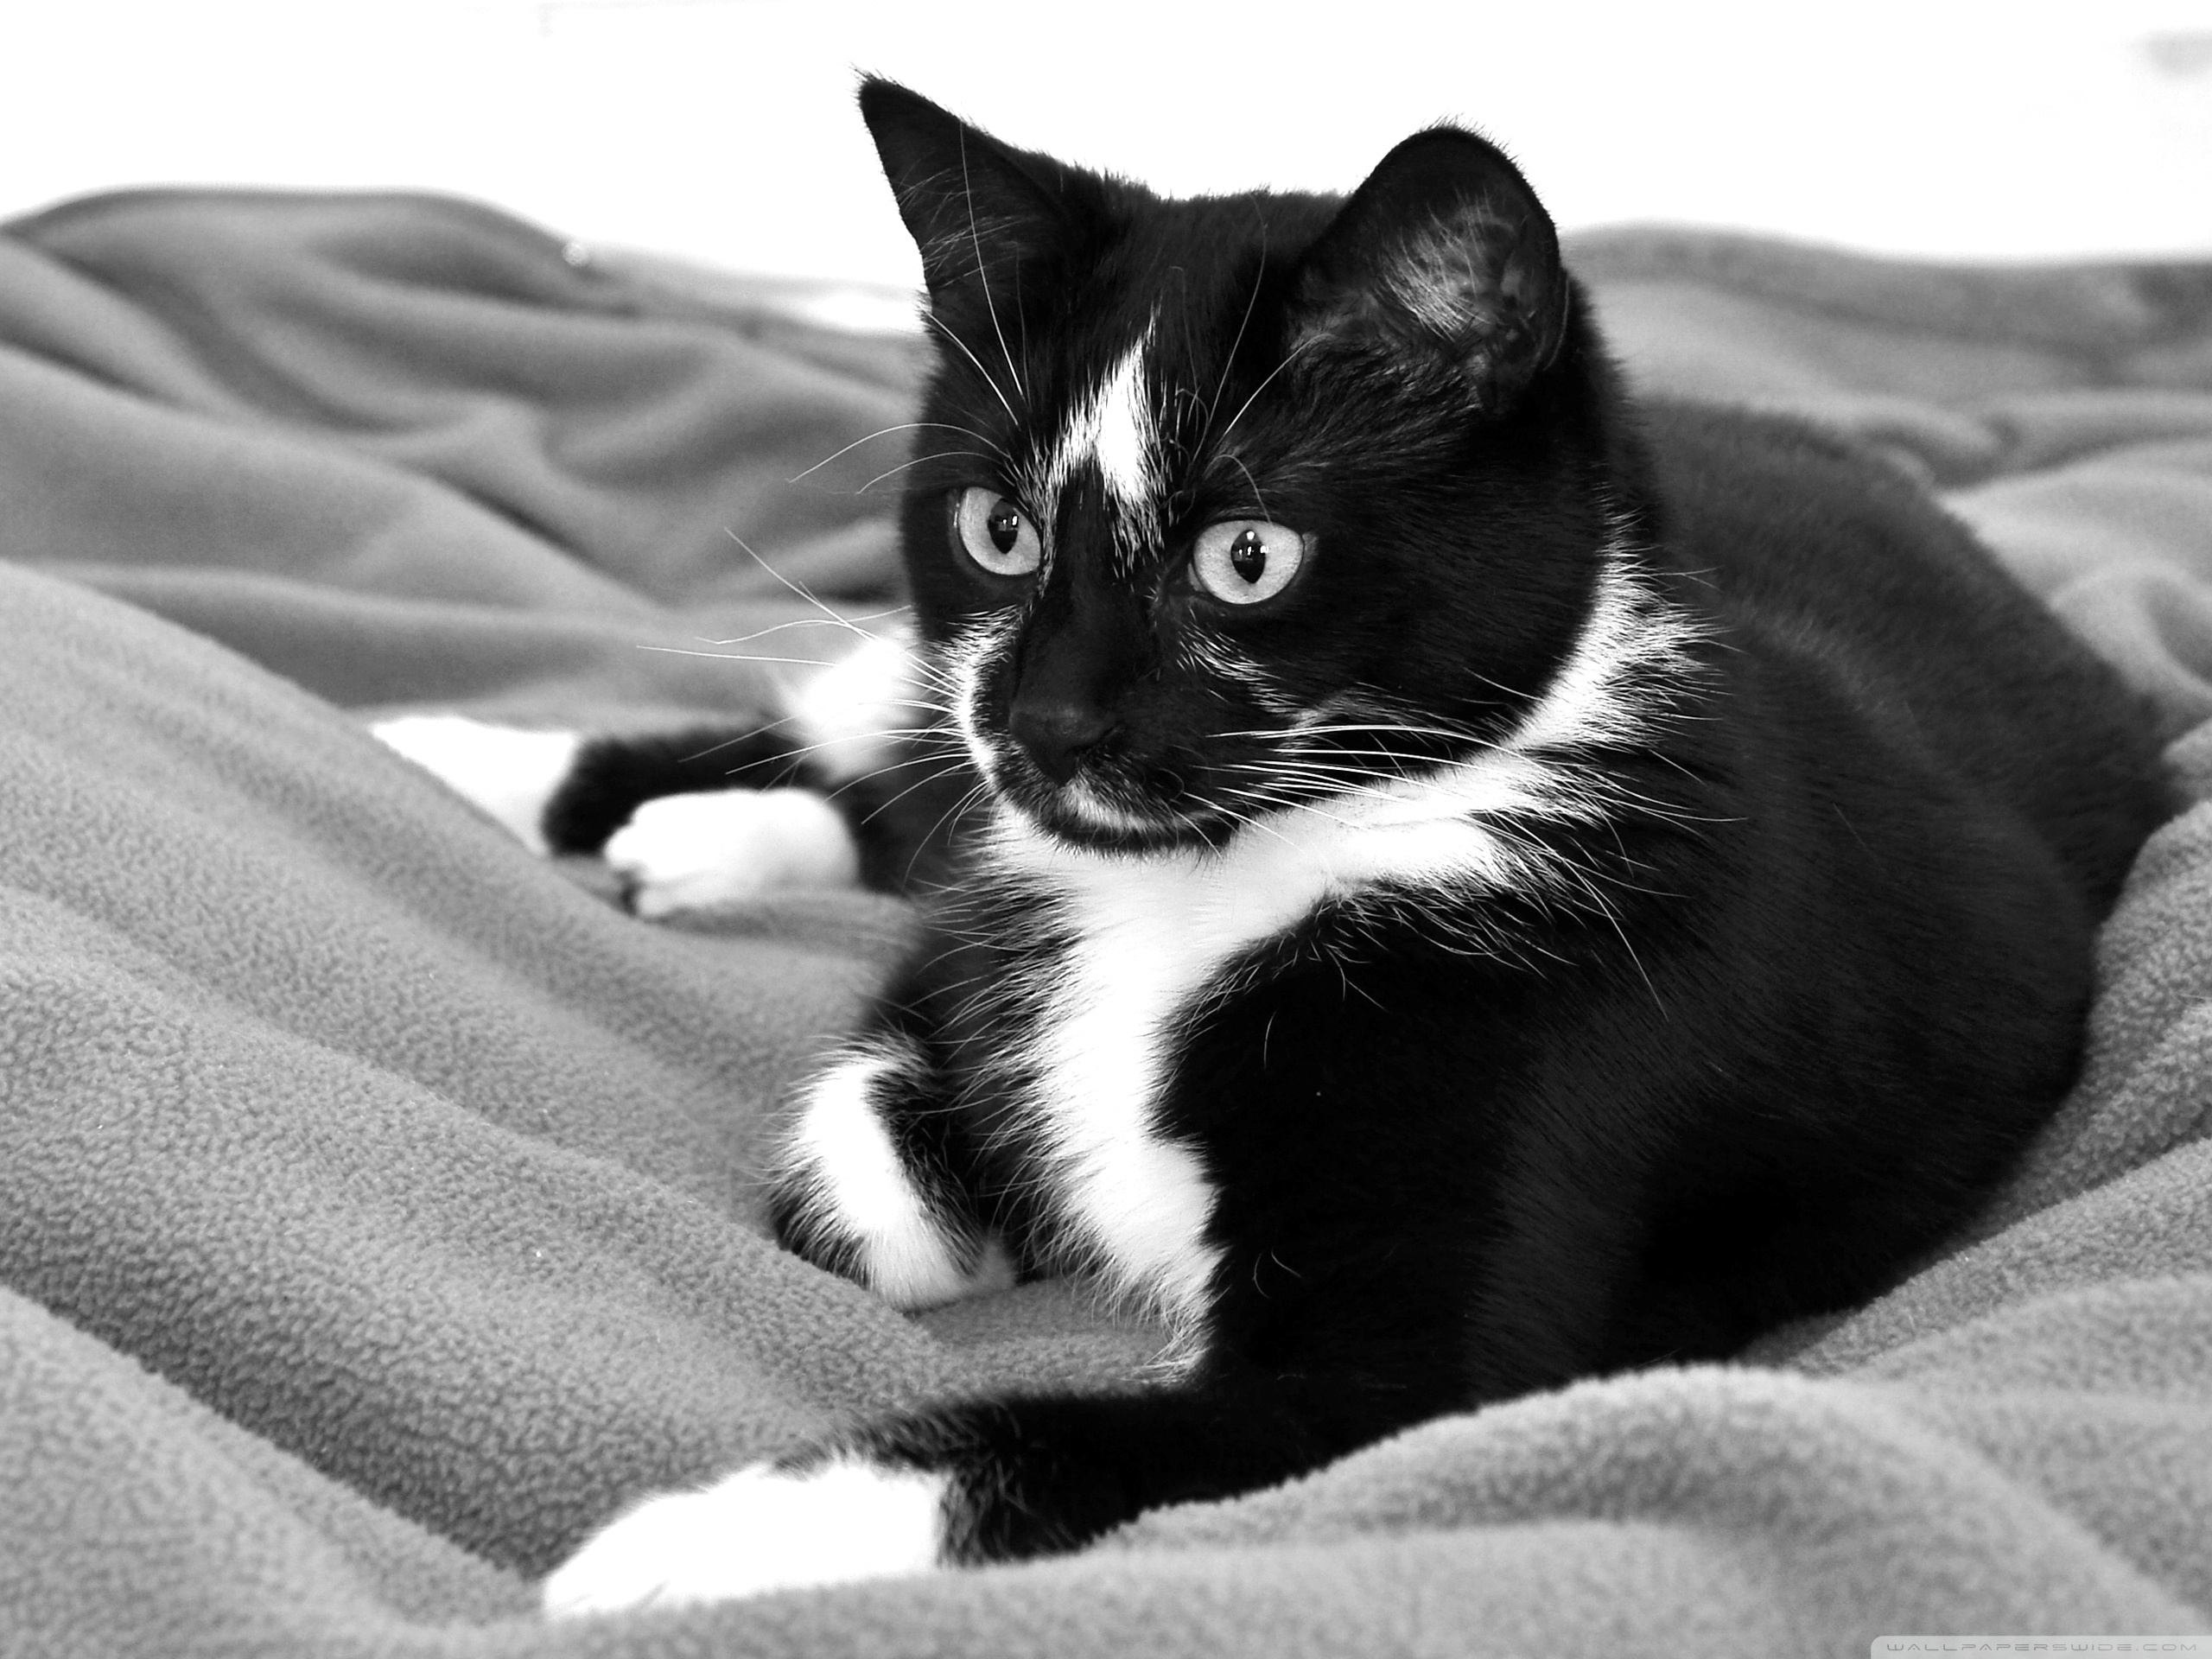 Черно белые картинки котят. Американская короткошёрстная кошка черно белая. Сибирская биколор короткошерстная. Американская короткошёрстная кошка черная. Европейская короткошерстная кошка черно-белая.